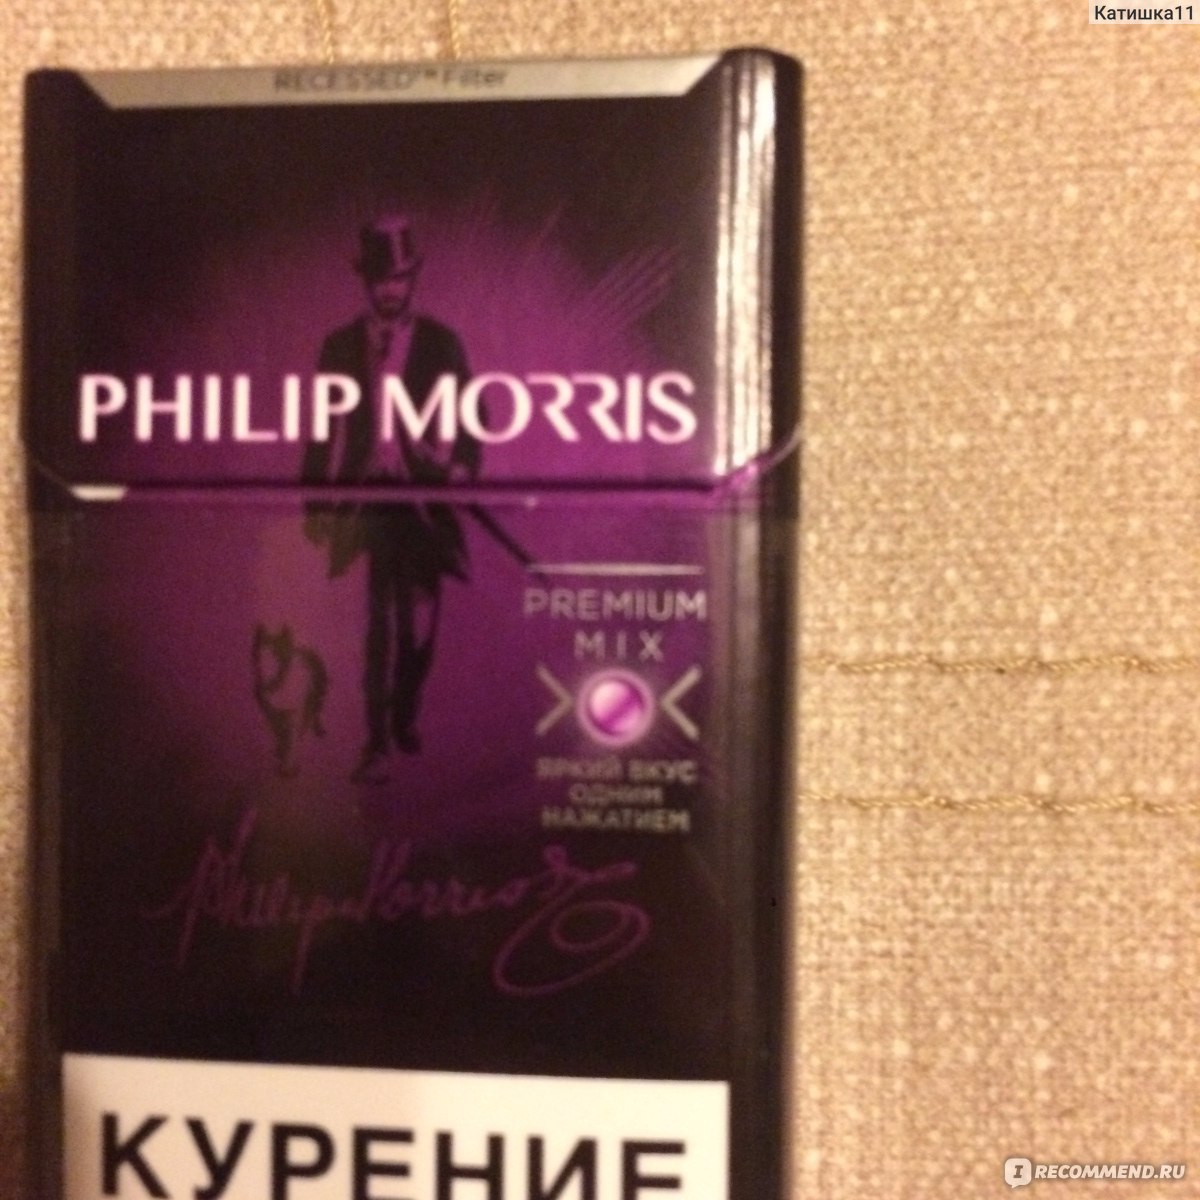 Филип морис фиолетовый. Сигареты Филип Моррис с кнопкой. Сигареты Филип Моррис с кнопкой фиолетовой.